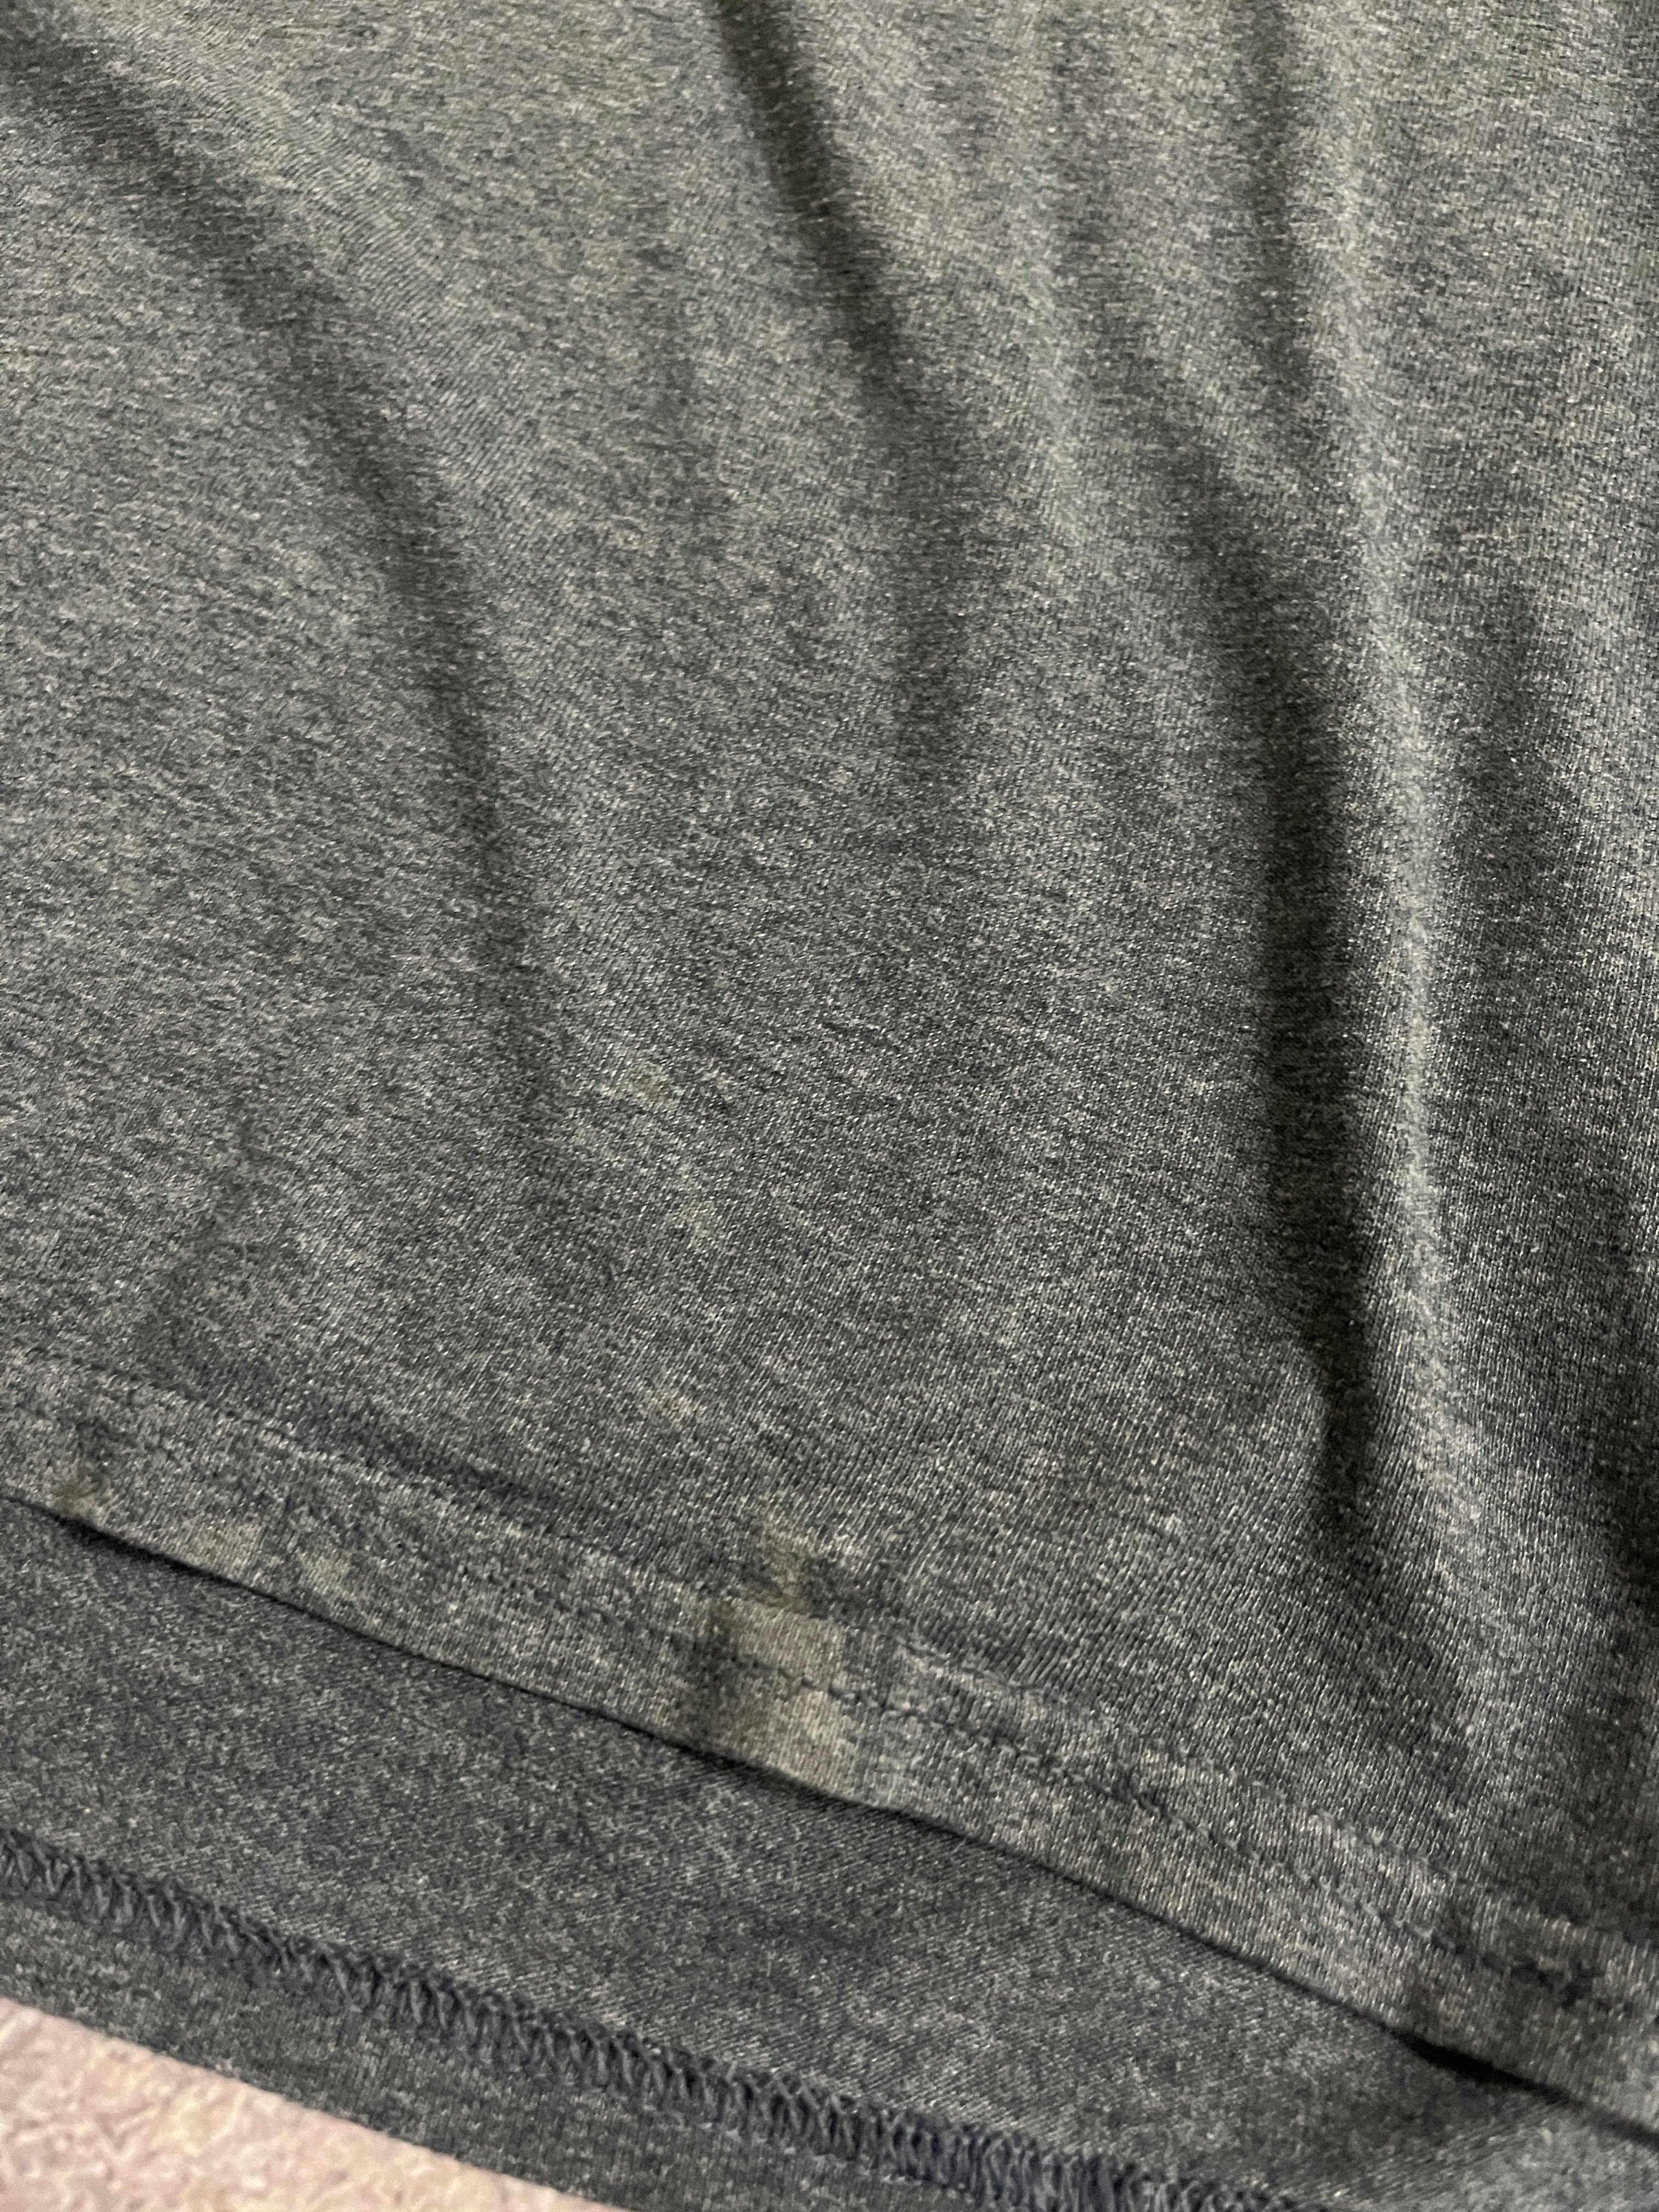 Vintage Drag Racing Tshirt Grey // Medium - RHAGHOUSE VINTAGE